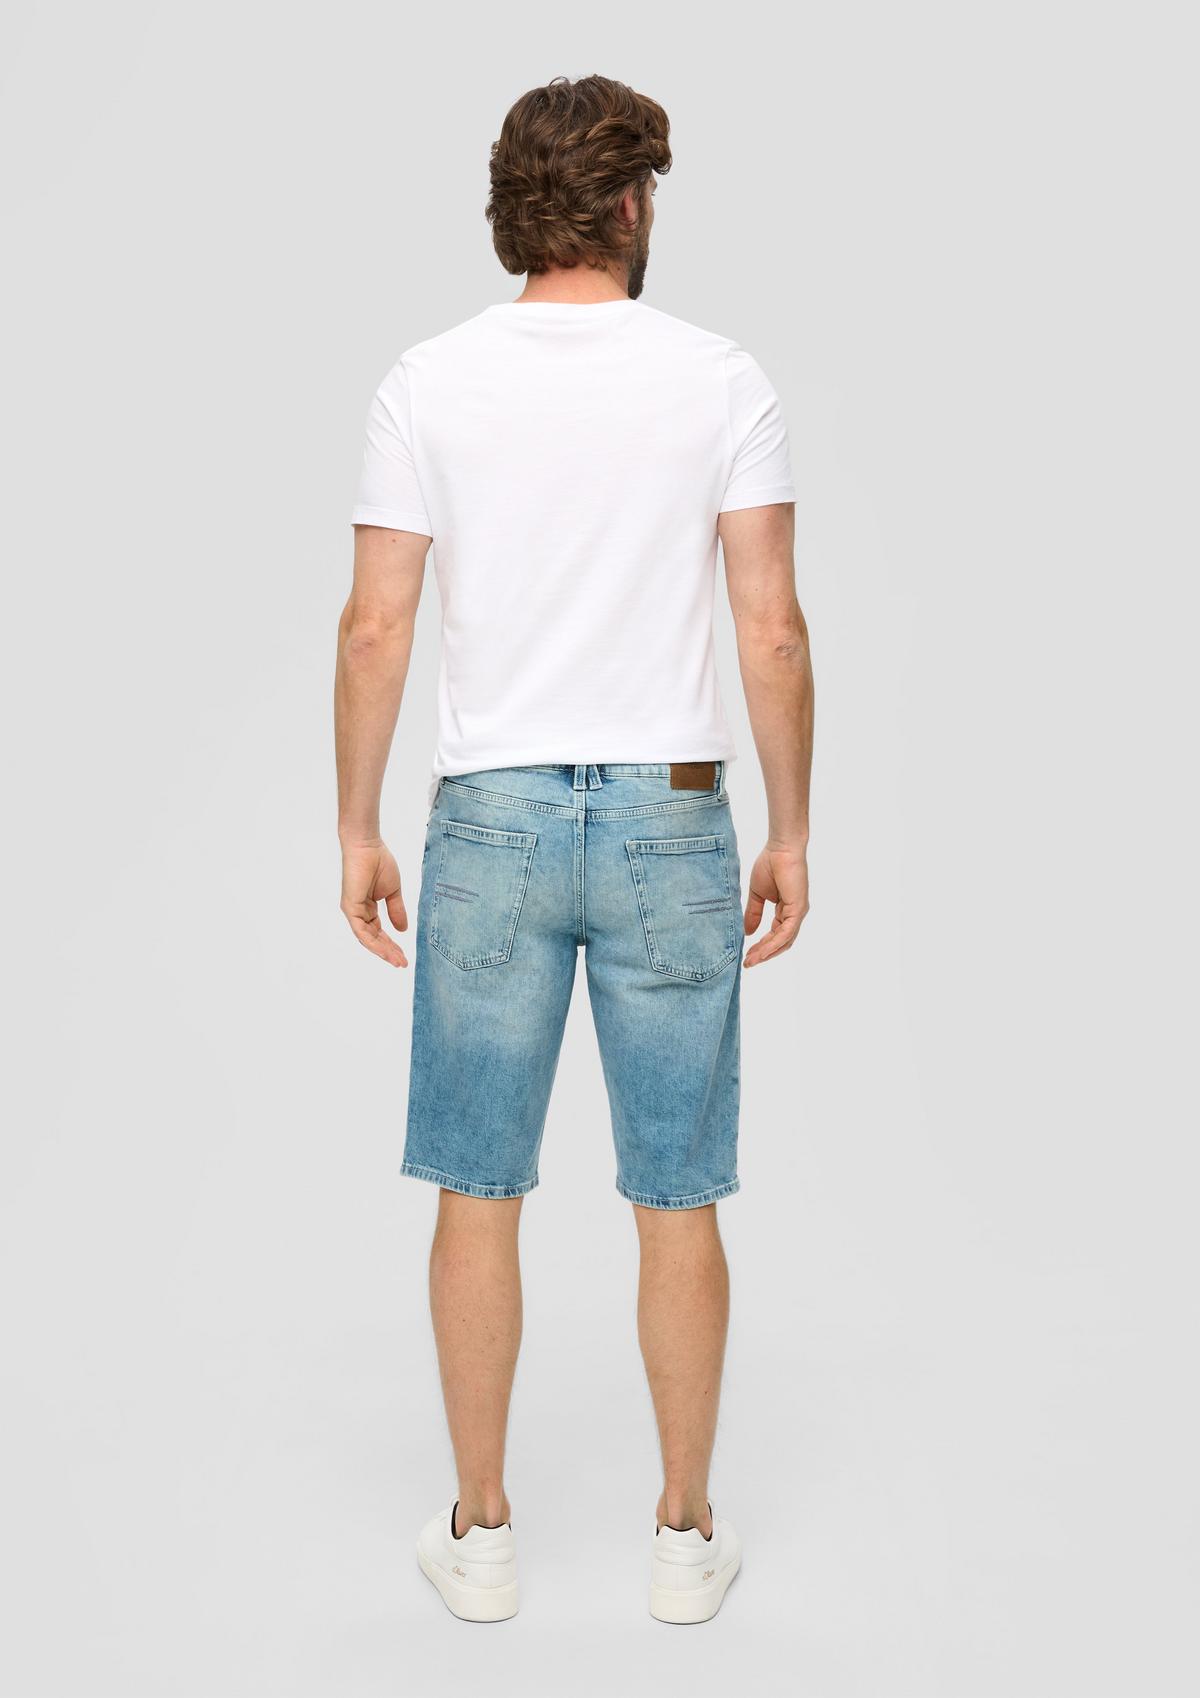 s.Oliver Jeans-short / regular fit / mid rise / slim leg